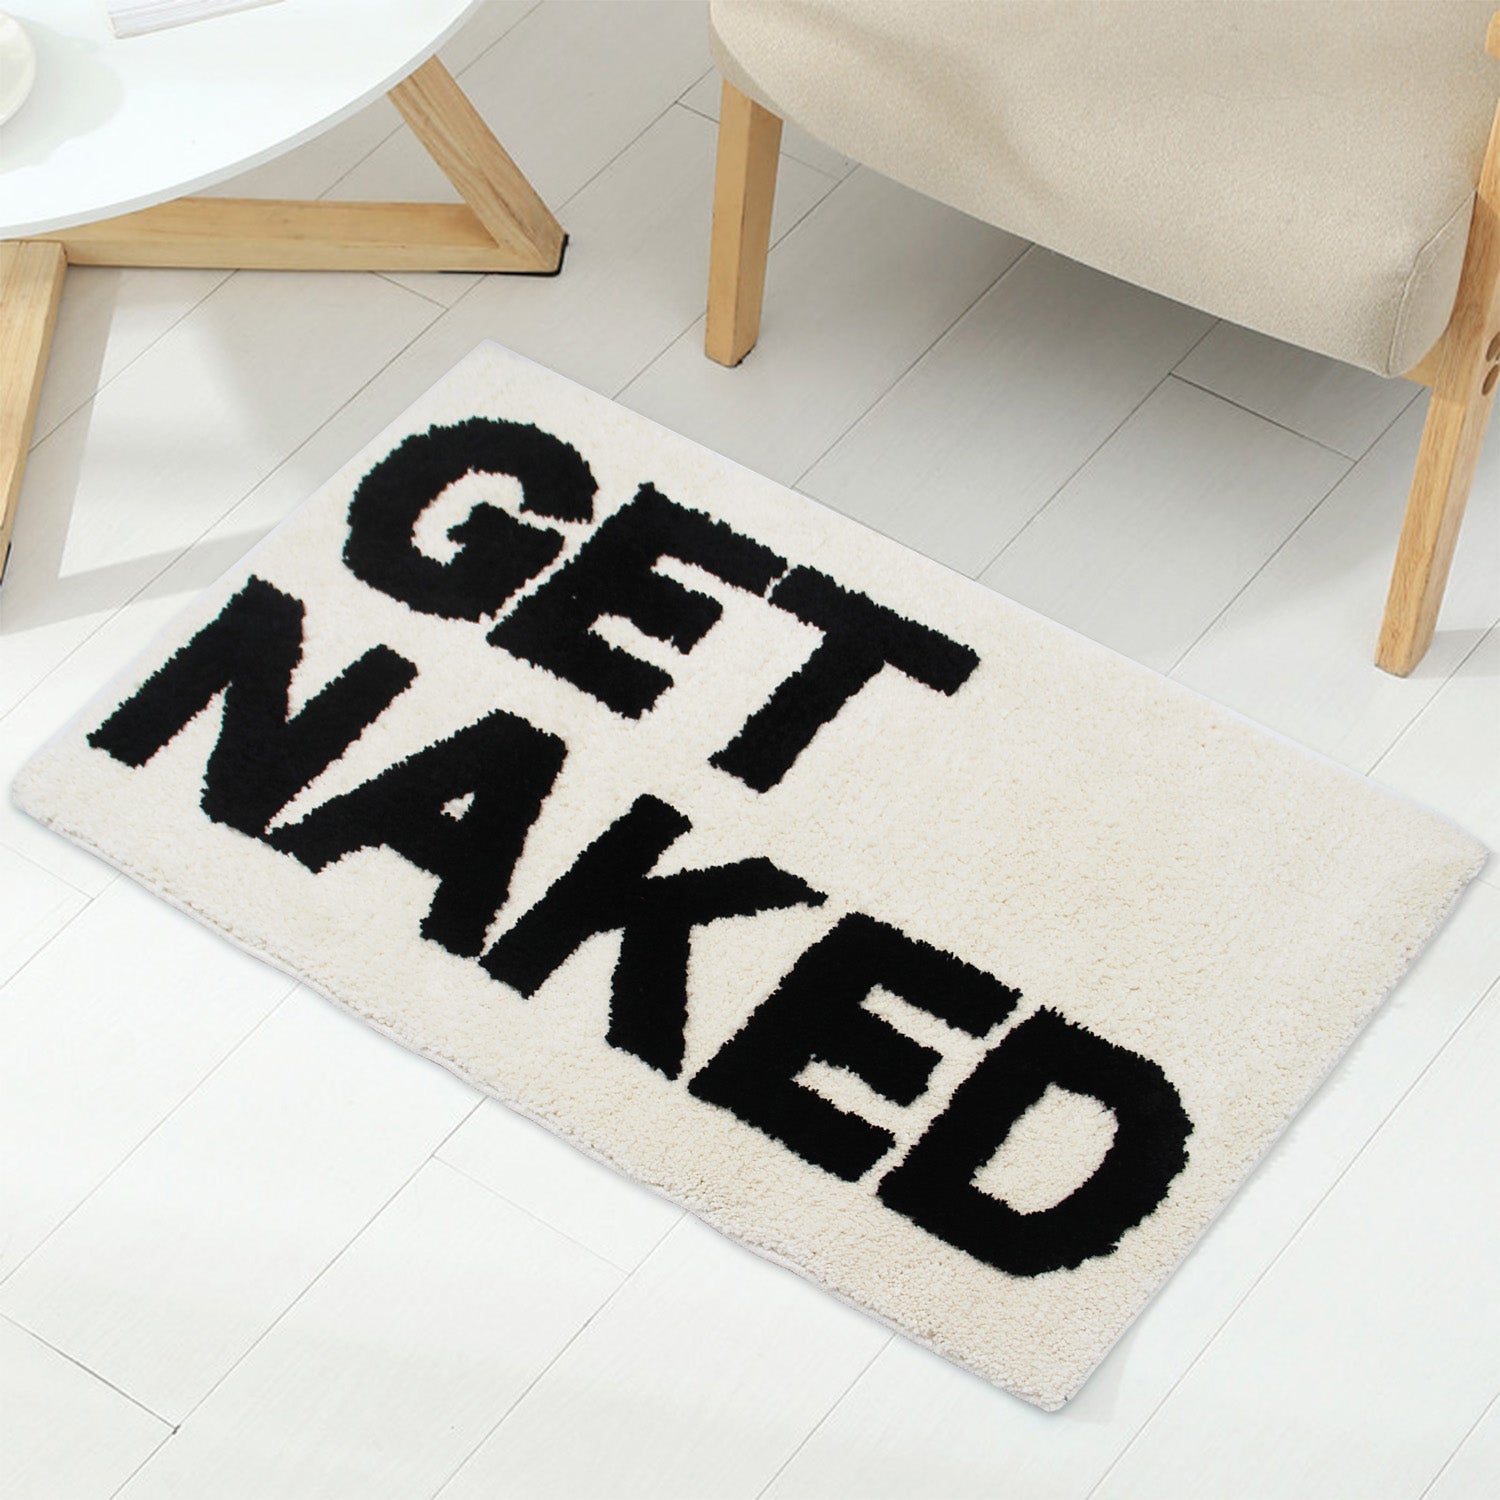 Feblilac Beige Get Naked Bath Mat Multiple Sized, Non Slip Bathmat